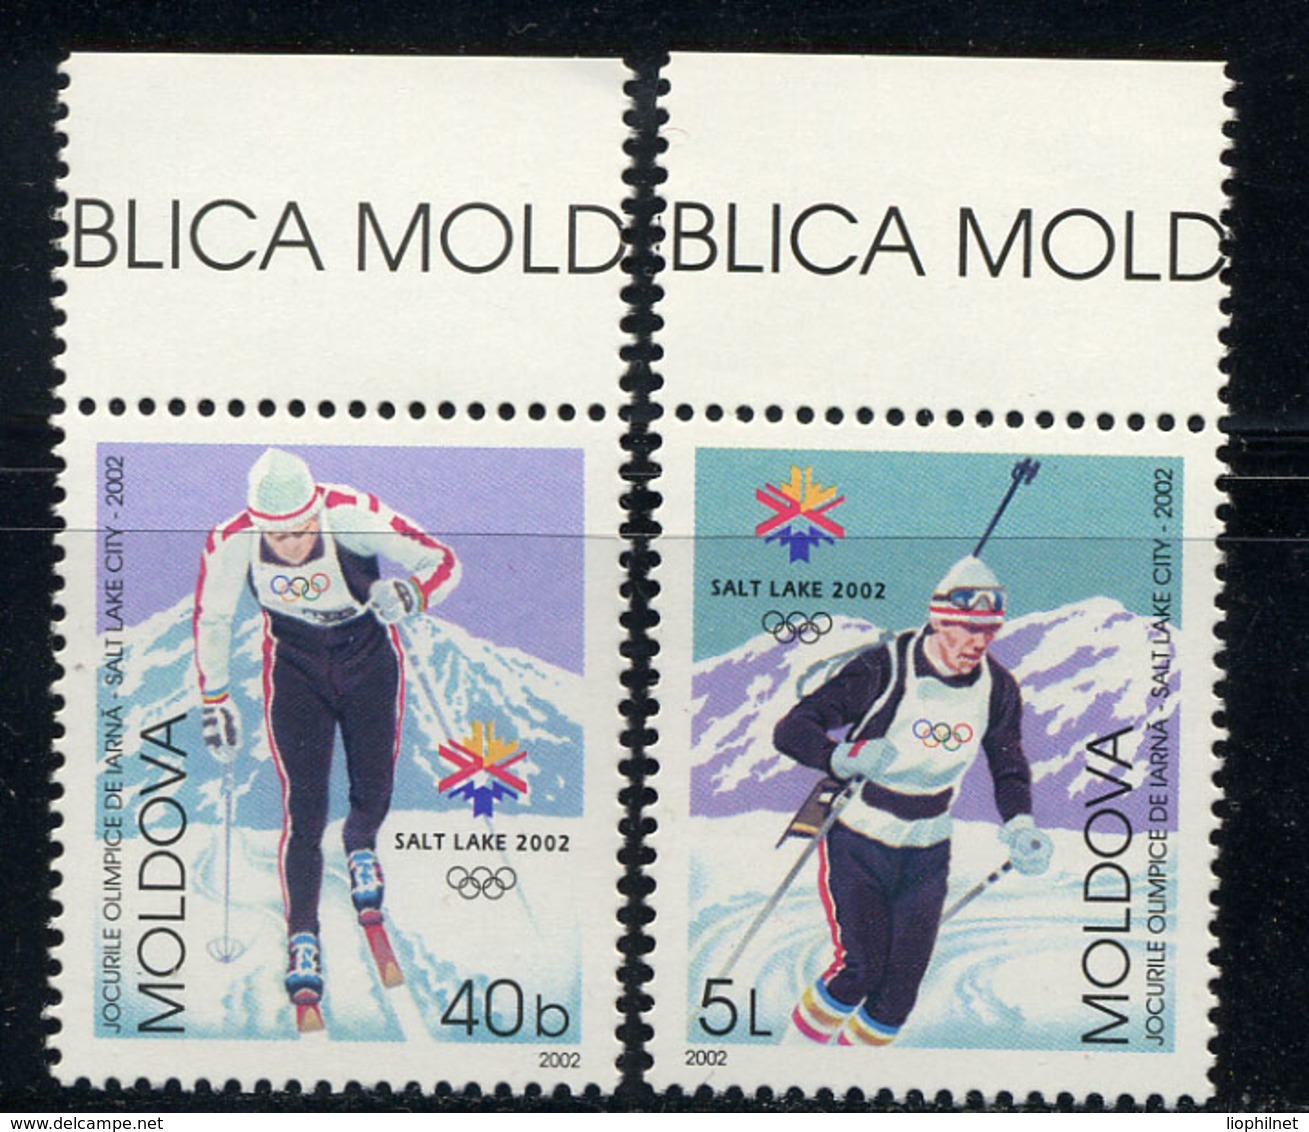 MOLDAVIE MOLDOVA 2002, J.O. Salt Lake City, Ski, 2 Valeurs, Neufs / Mint. R1454 - Winter 2002: Salt Lake City